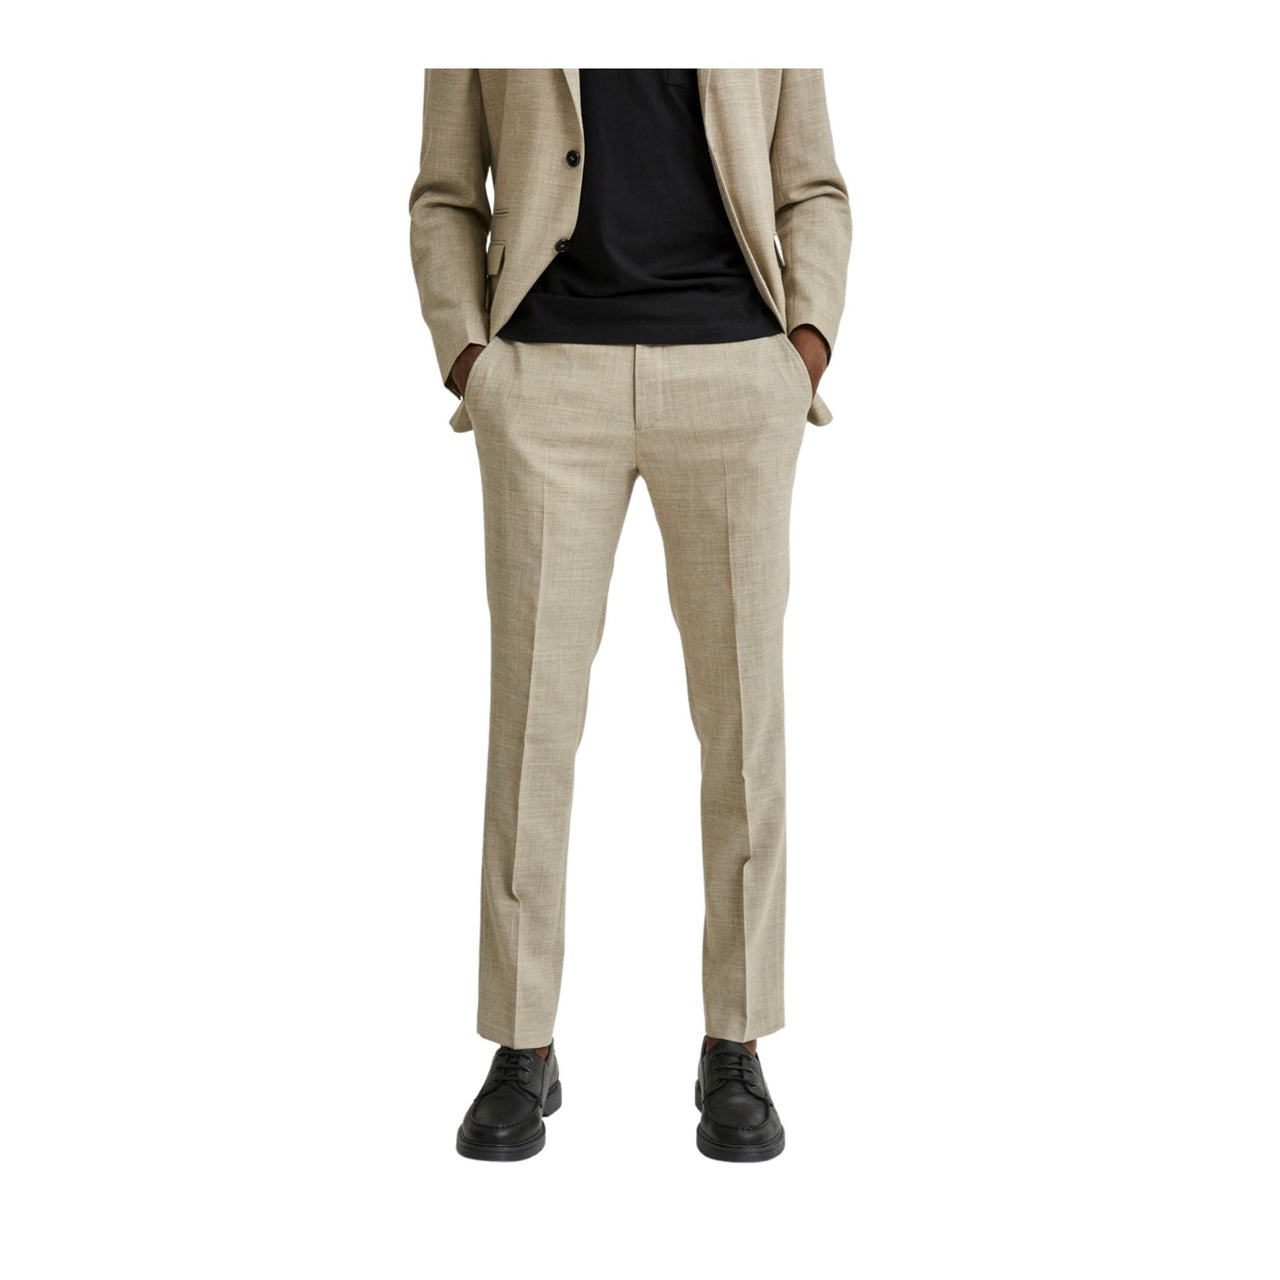 16079927SAND Pantalon selected slhslim-oasis light sand trs b noos - Medina Menswear®